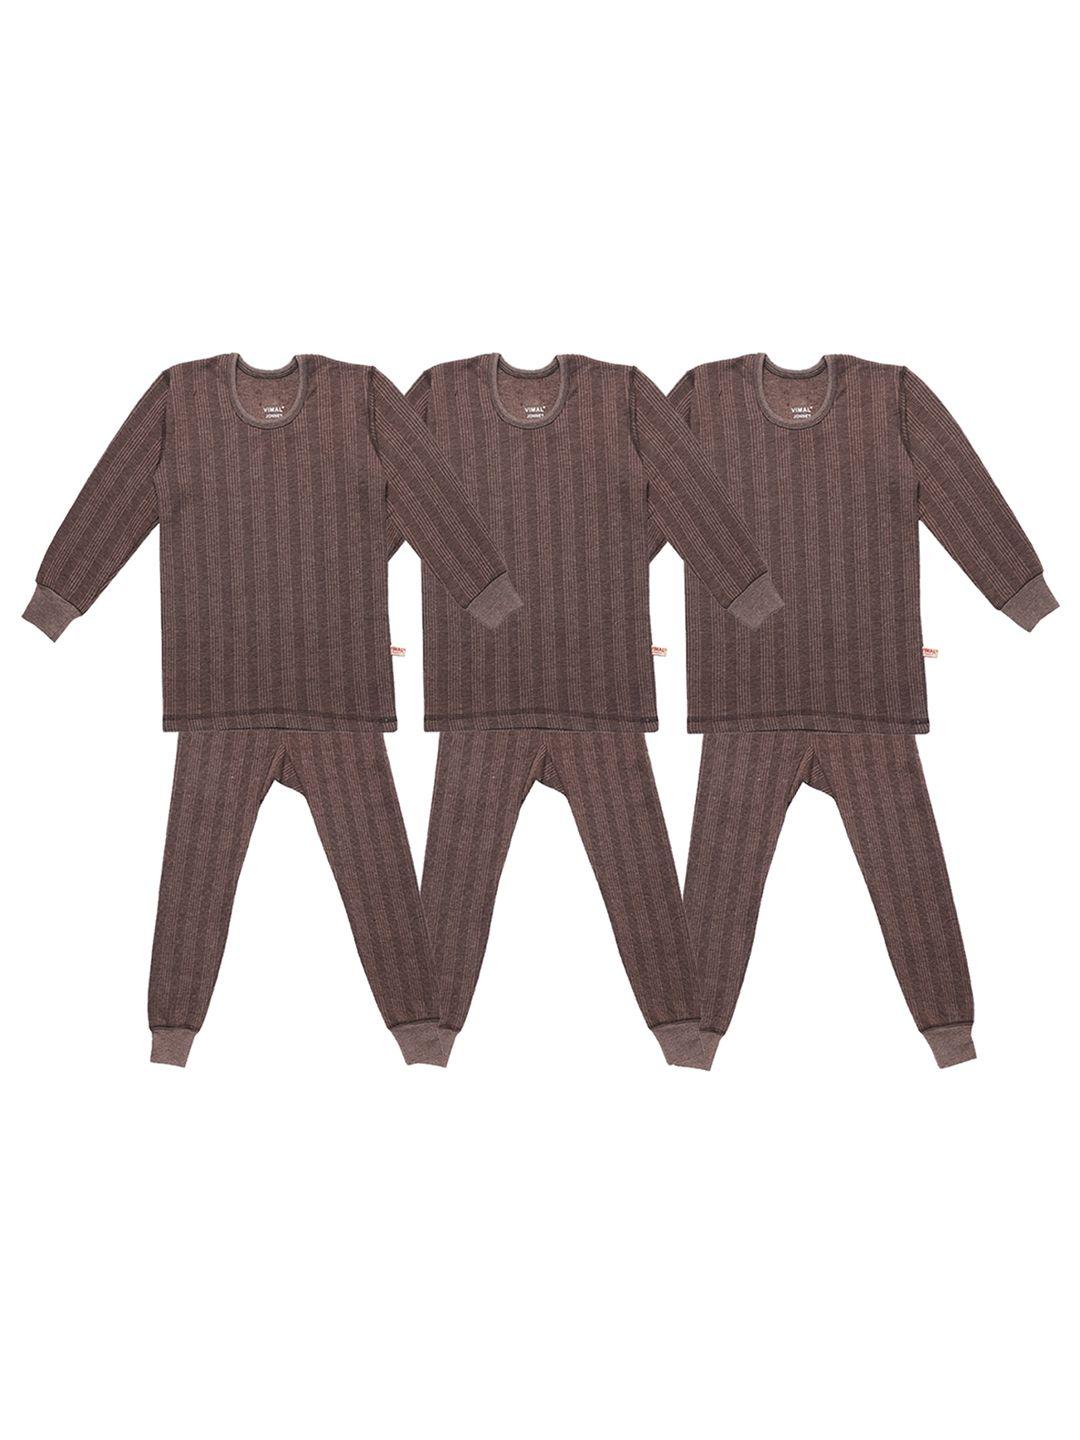 vimal jonney infant kids pack of 3 brown striped thermal set